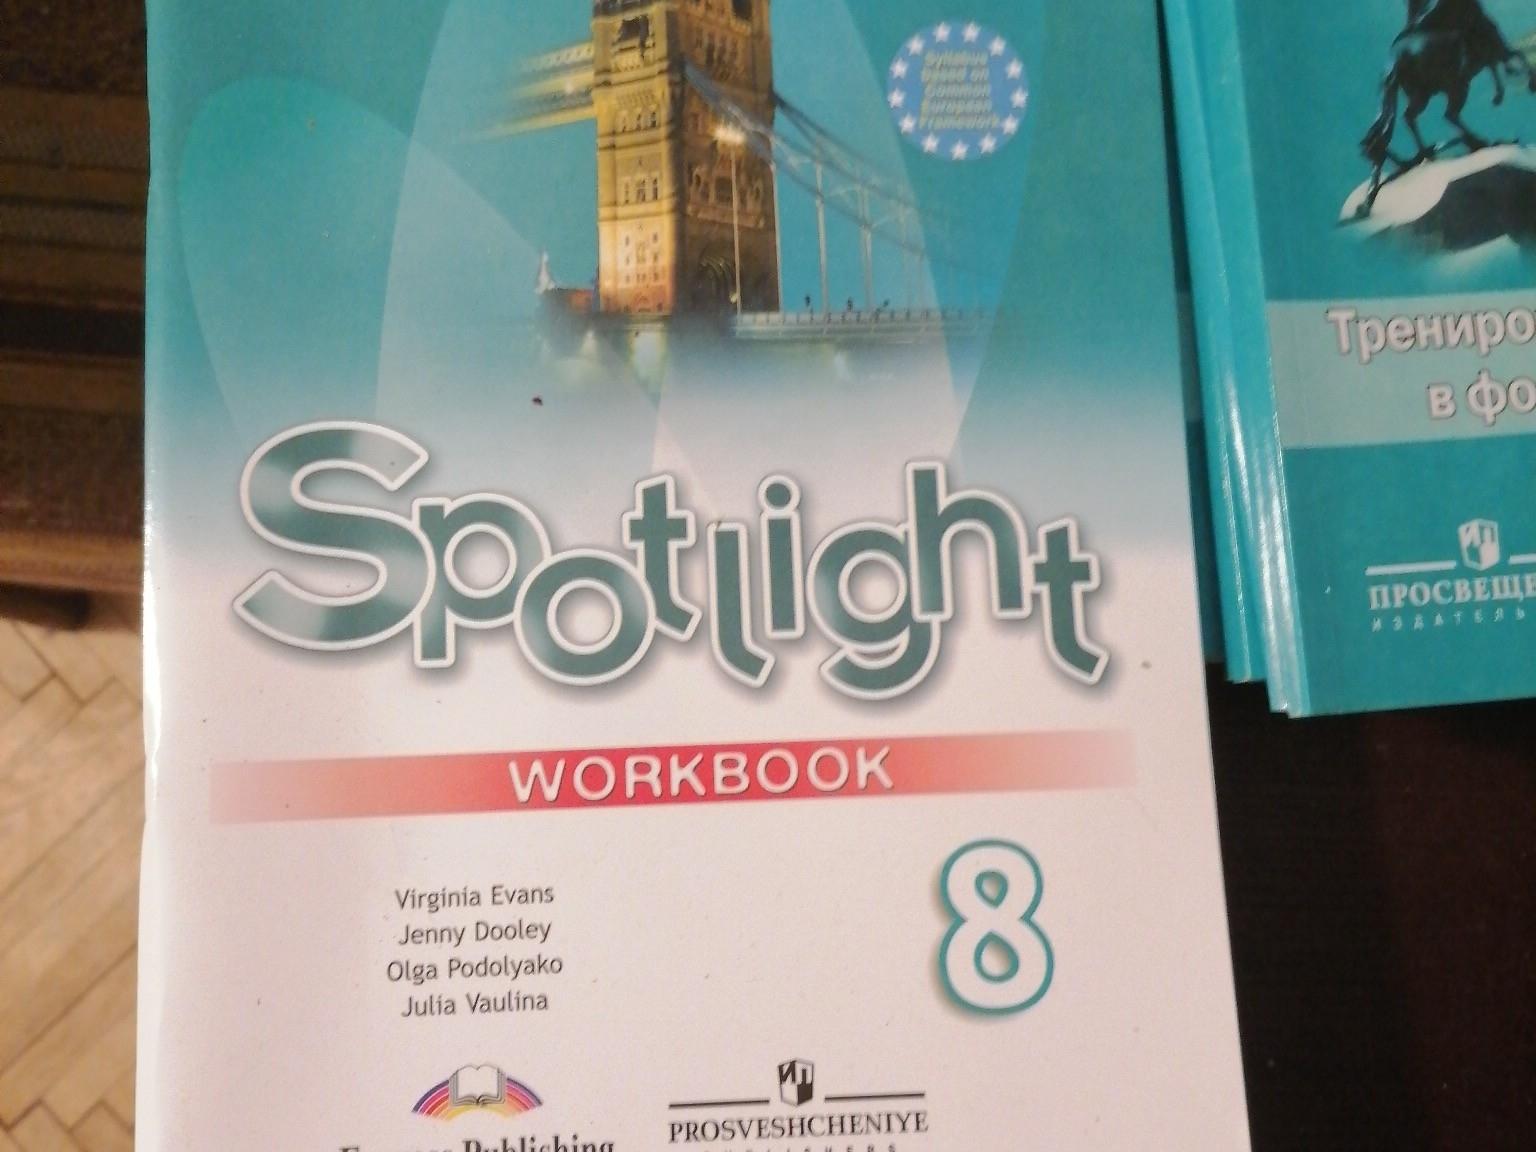 Spotlight 5 workbook book. Spotlight 7 Workbook. Spotlight 7 класс 7 Wordbook. Spotlight 7 Workbook тетрадка. Spotlight Seven Workbook.